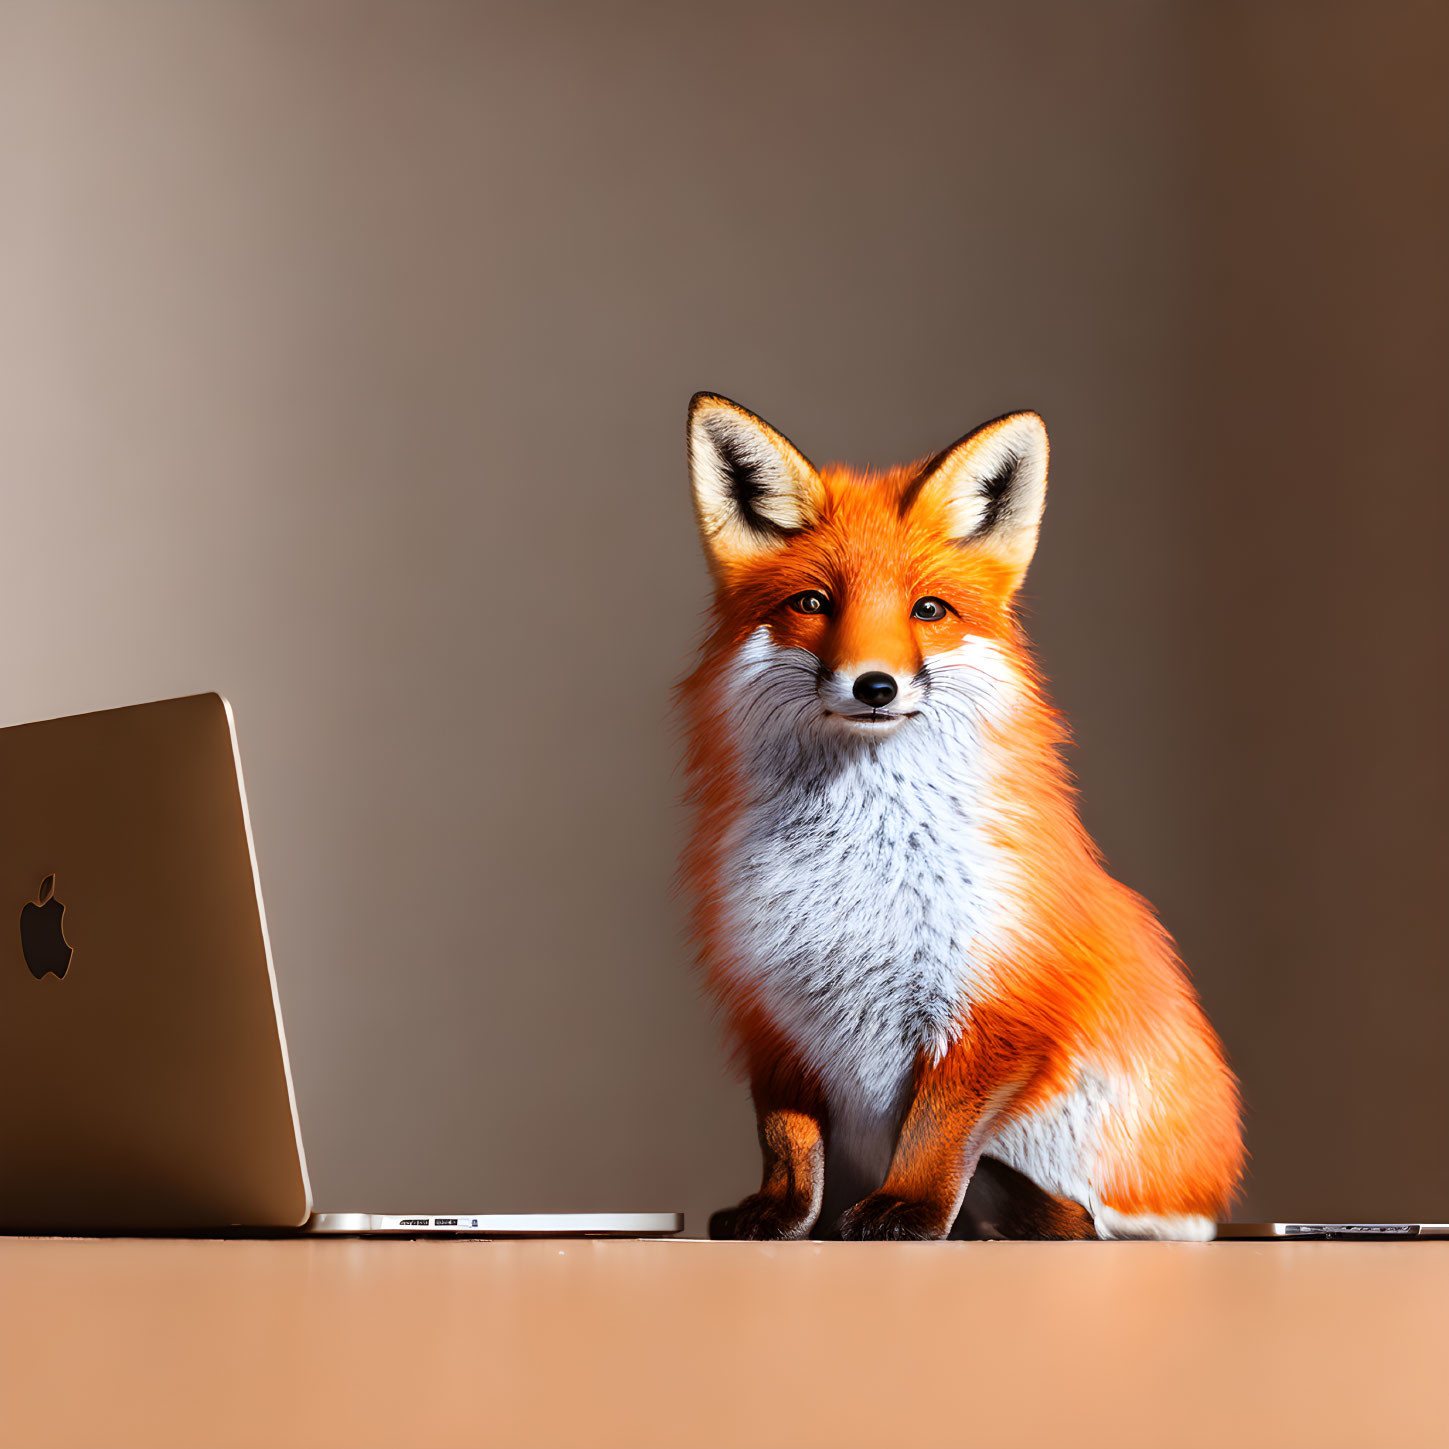 Red fox sitting behind laptop on desk with beige background